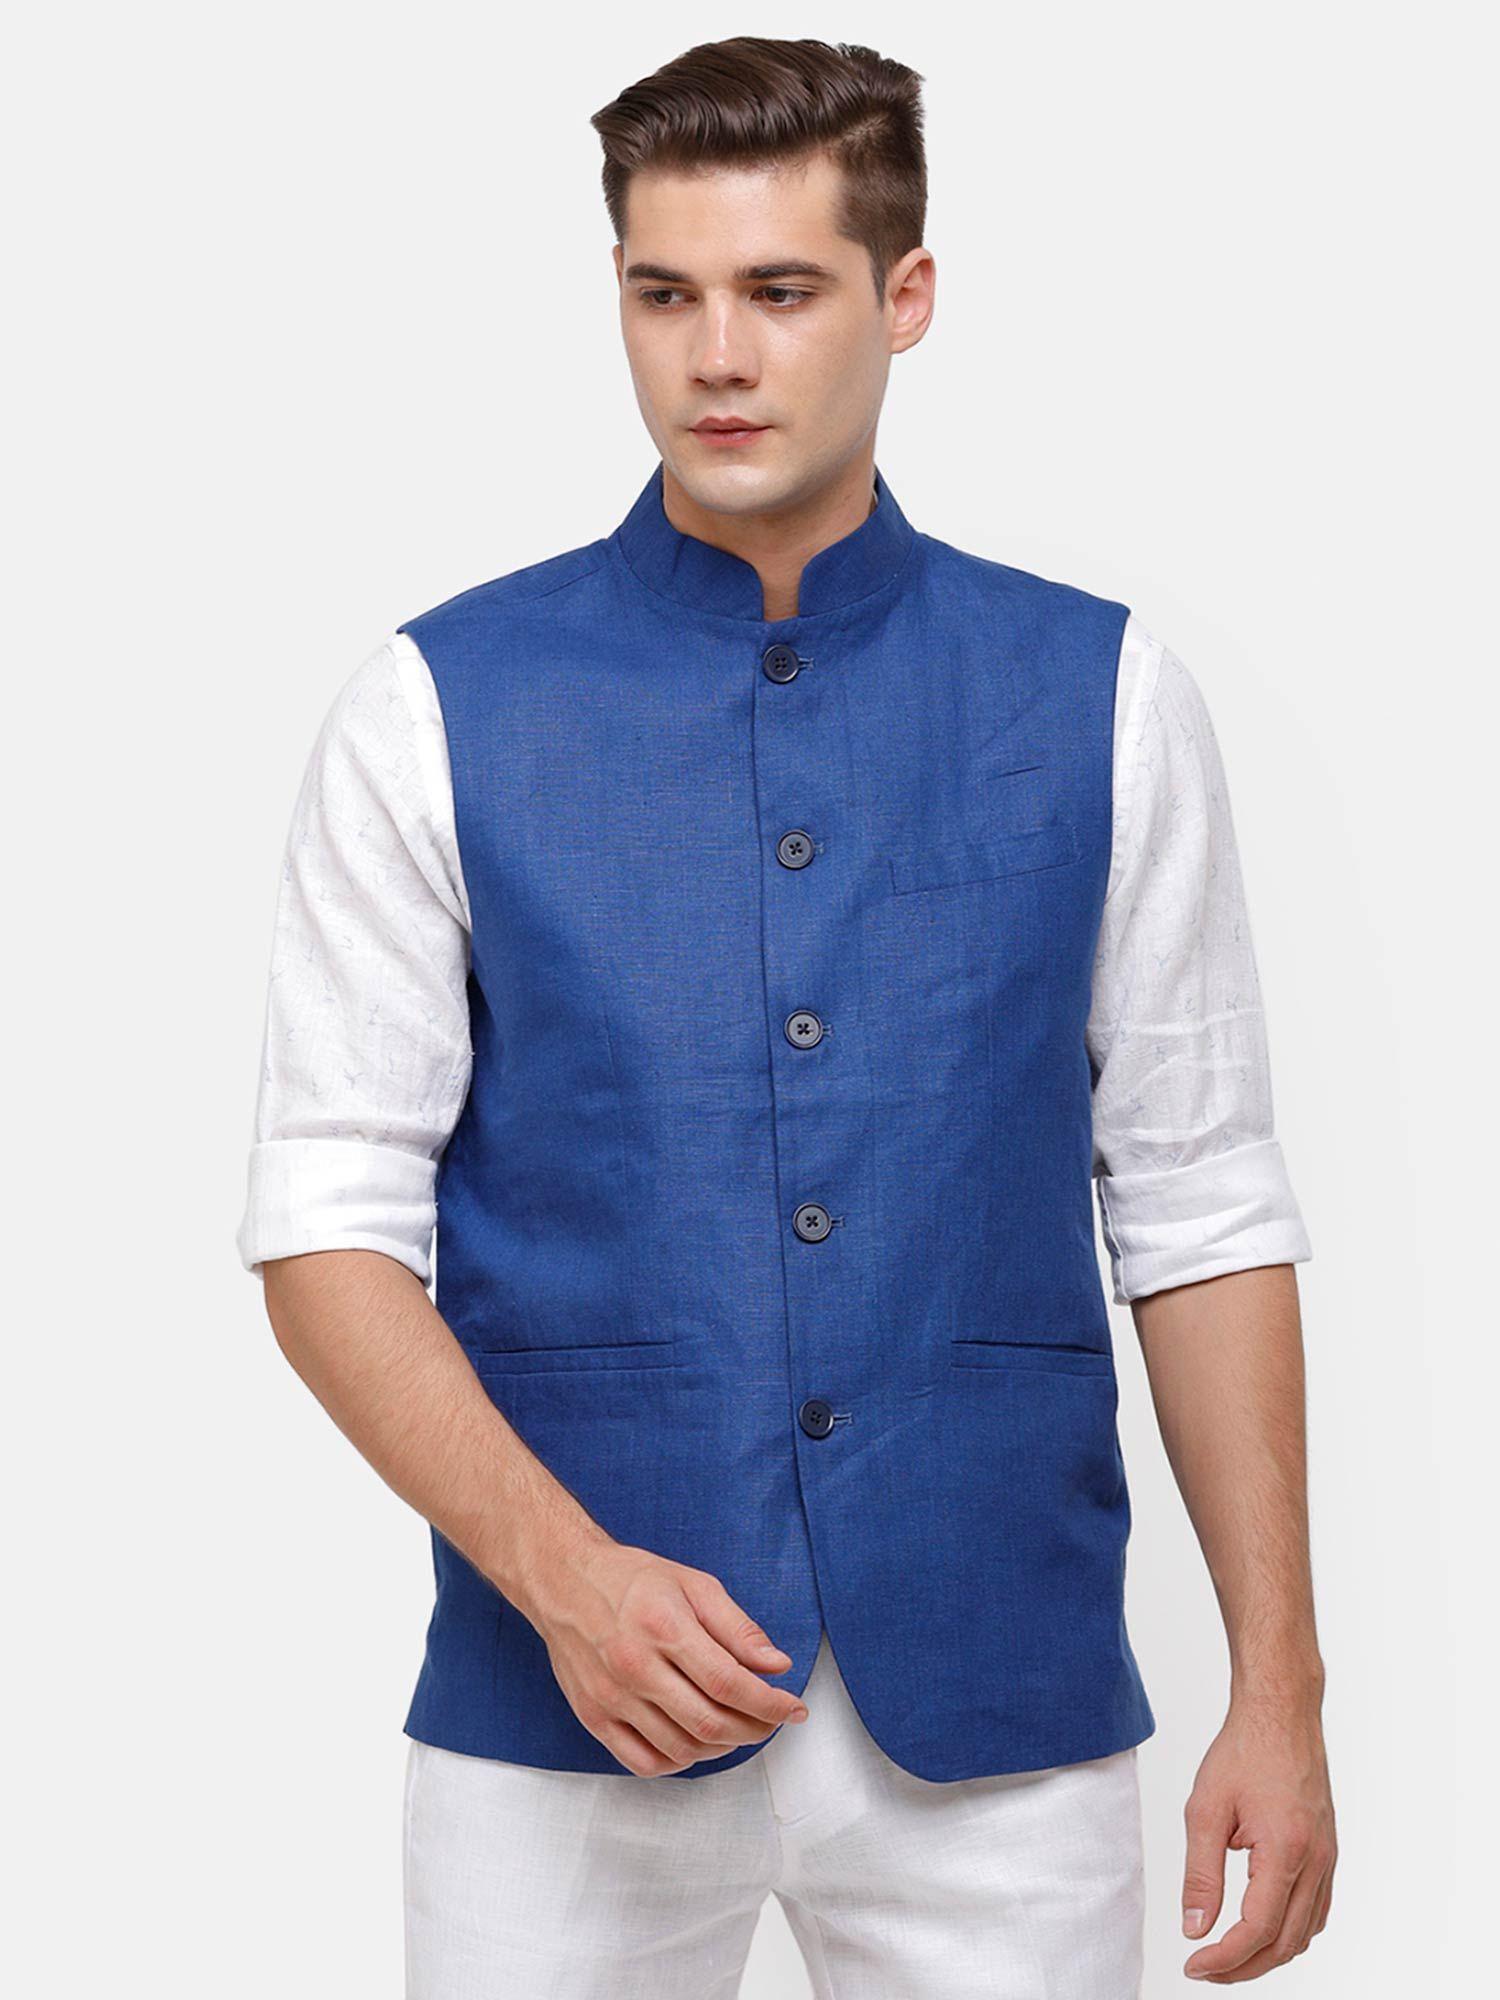 men's-pure-linen-blue-solid-nehru-jacket